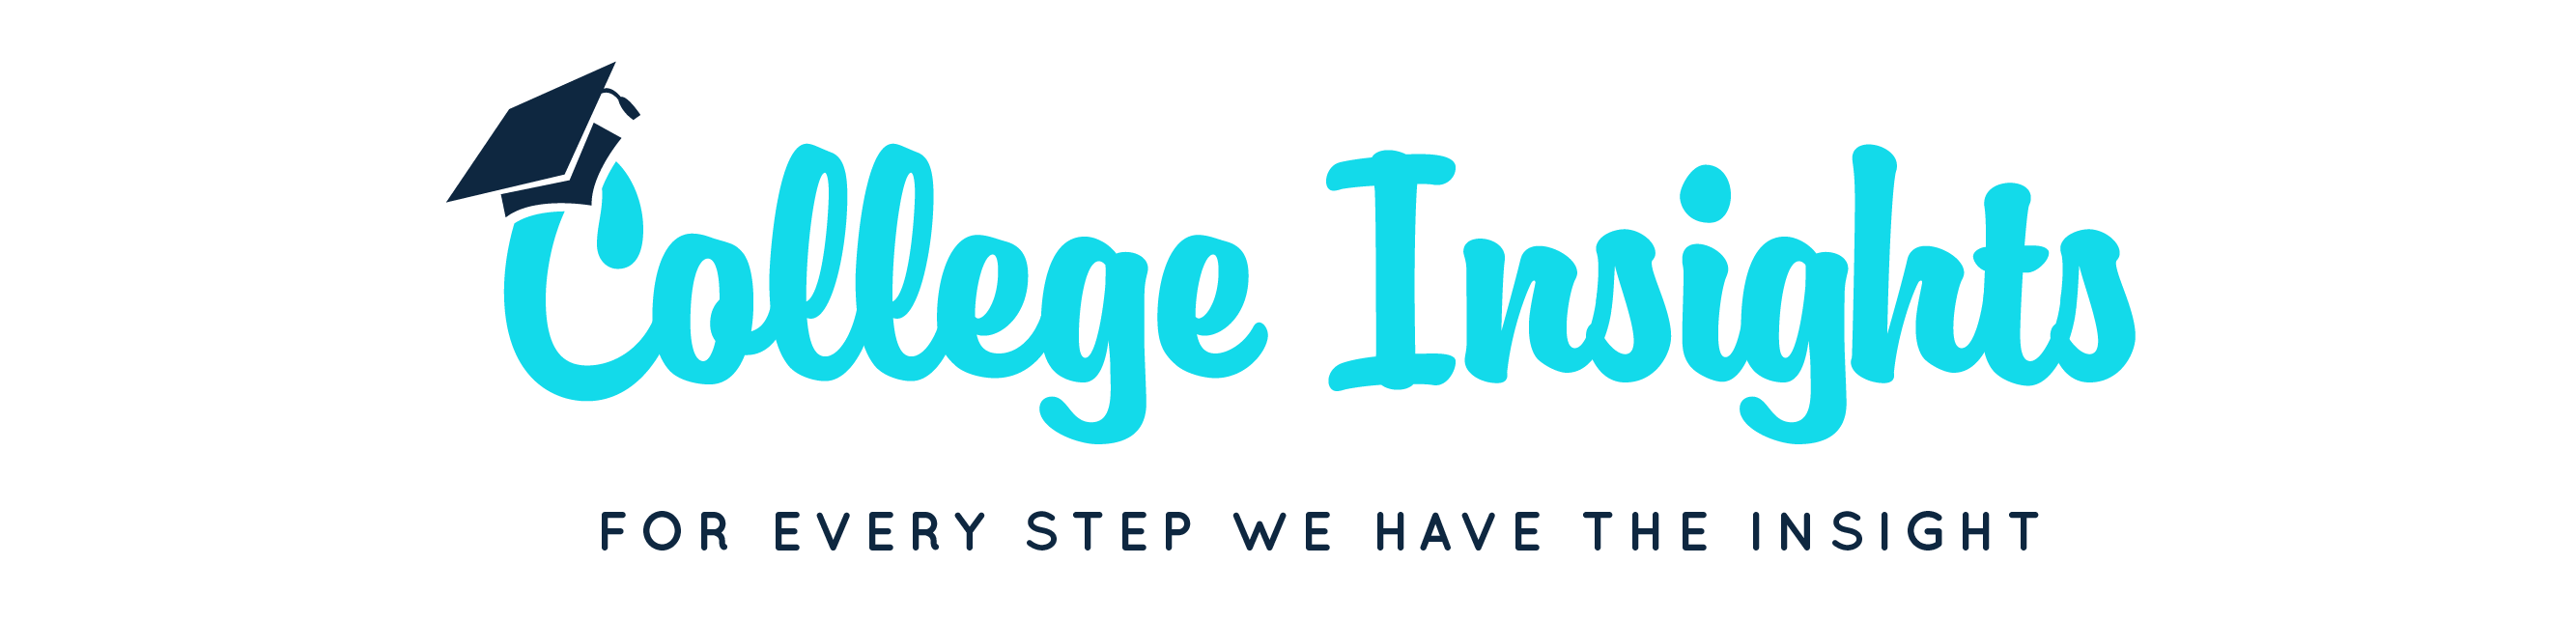 college insights logo